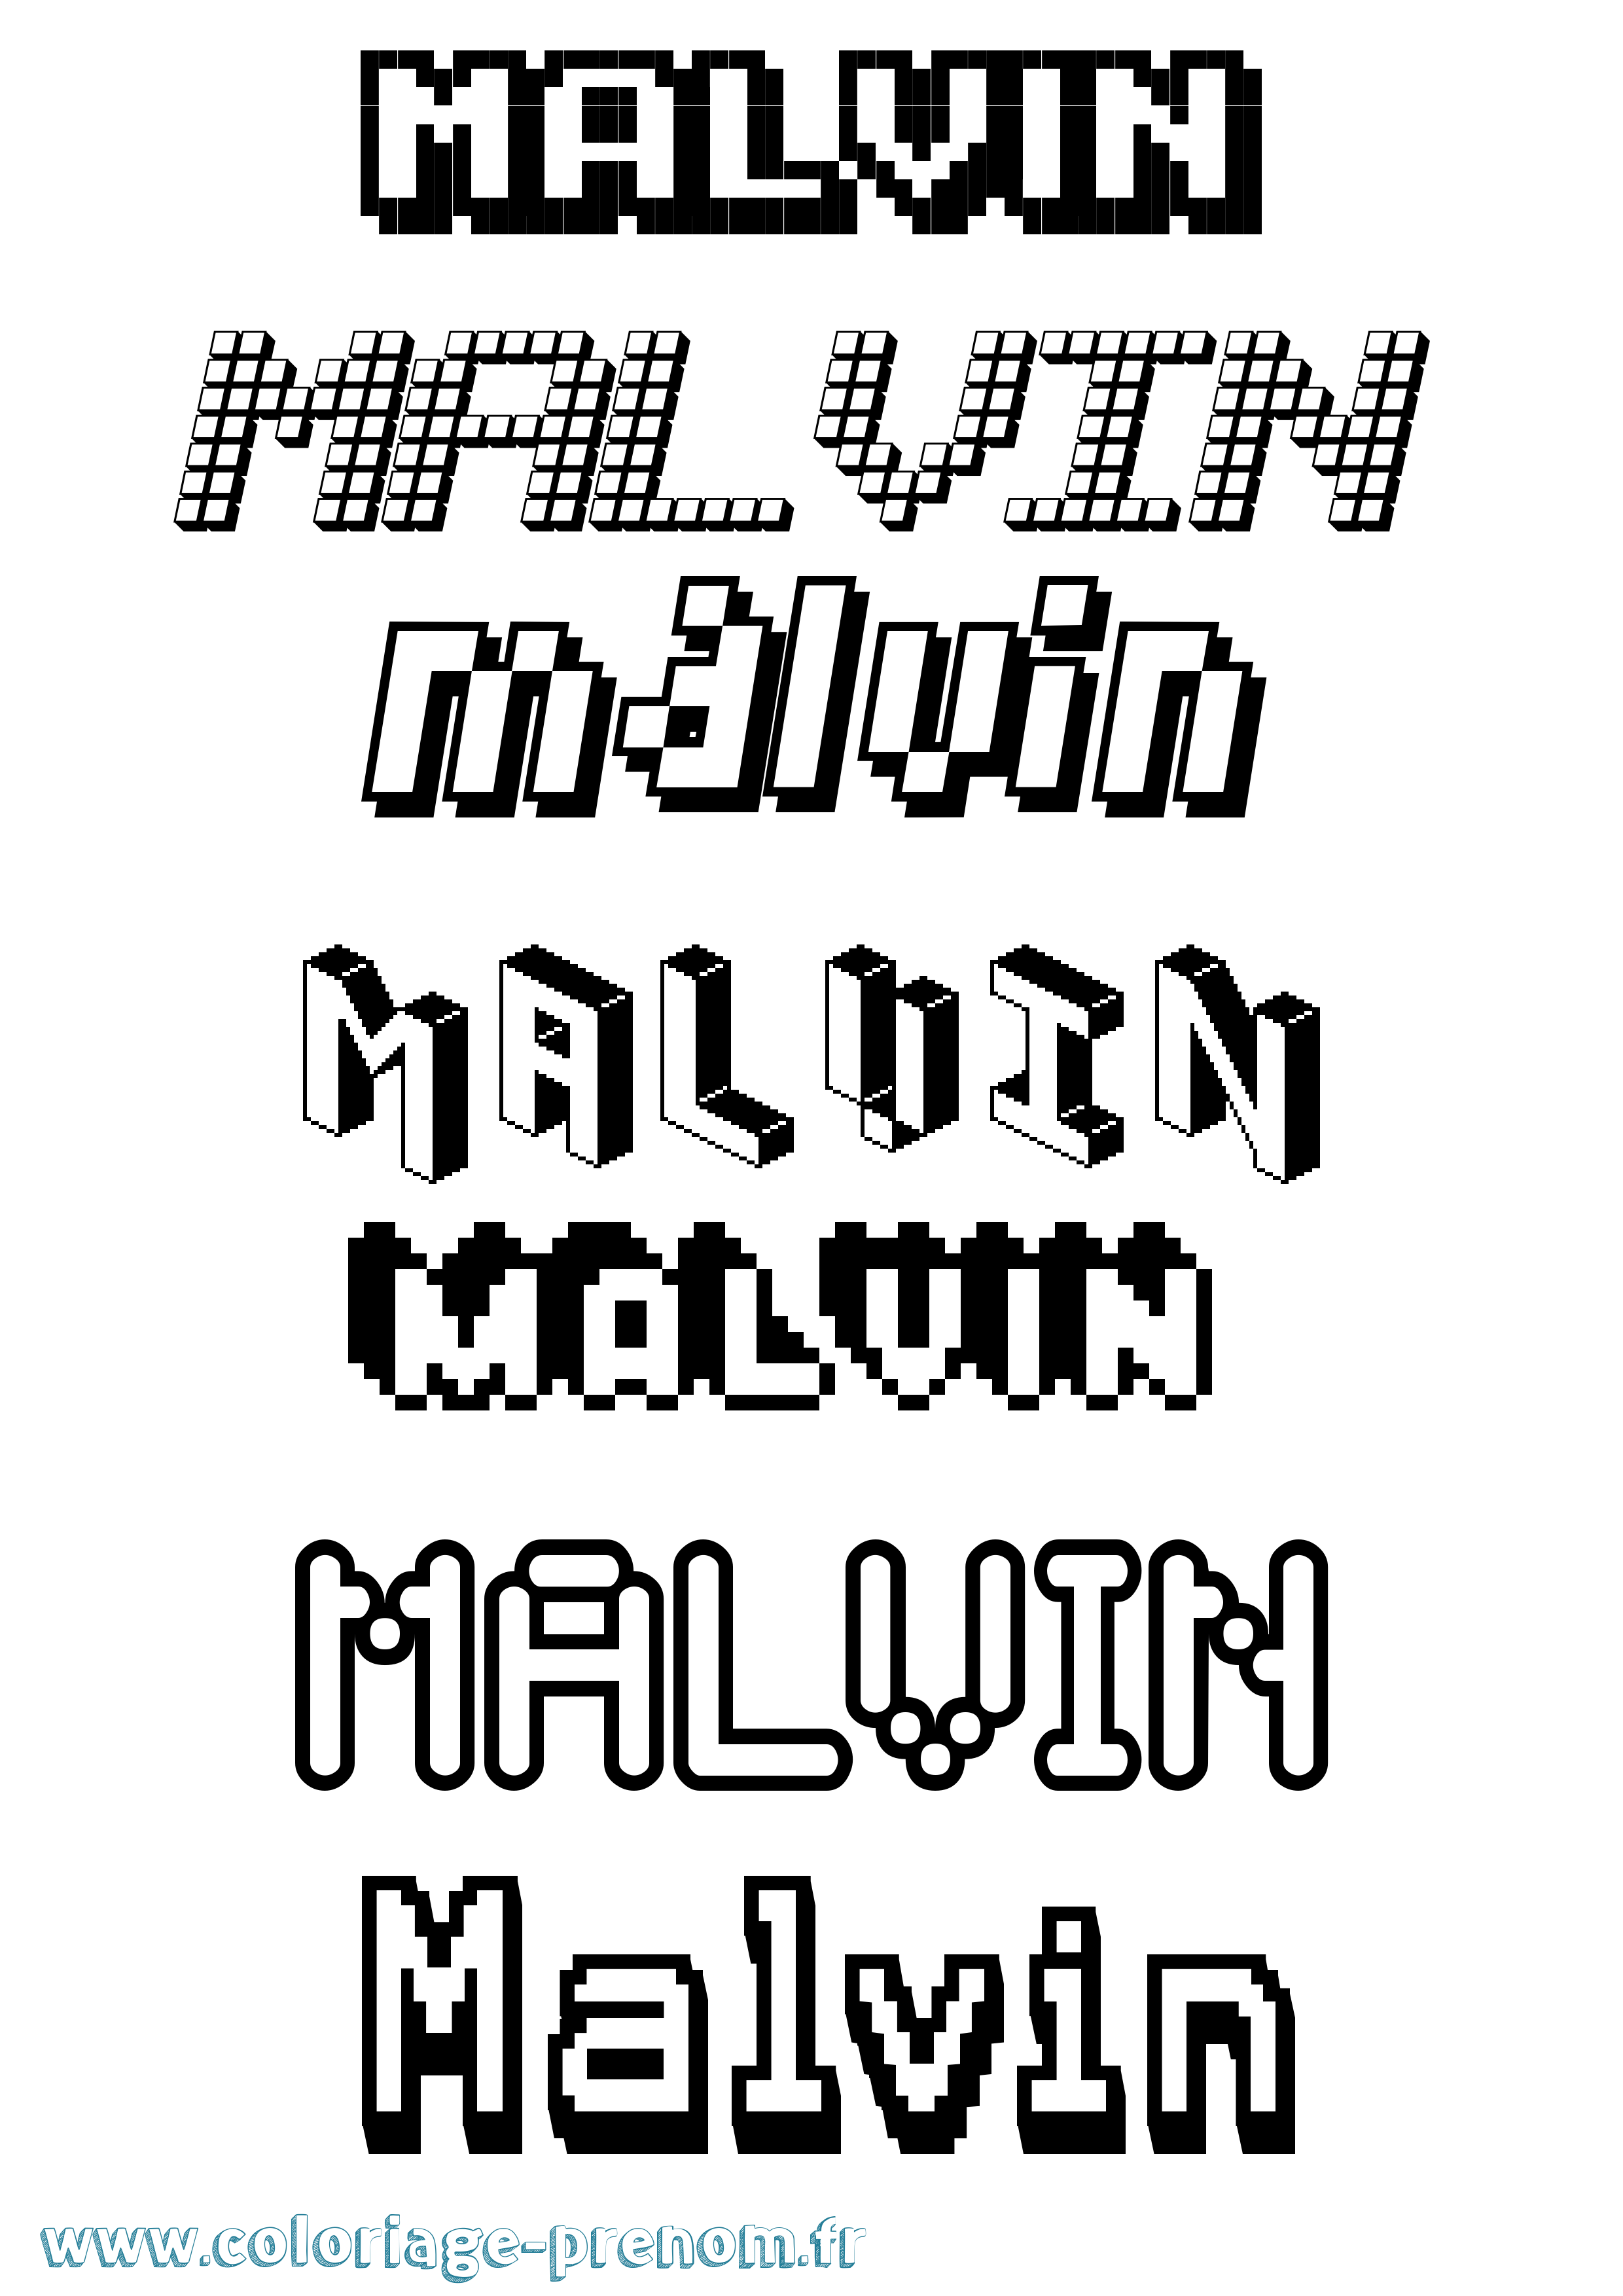 Coloriage prénom Malvin Pixel